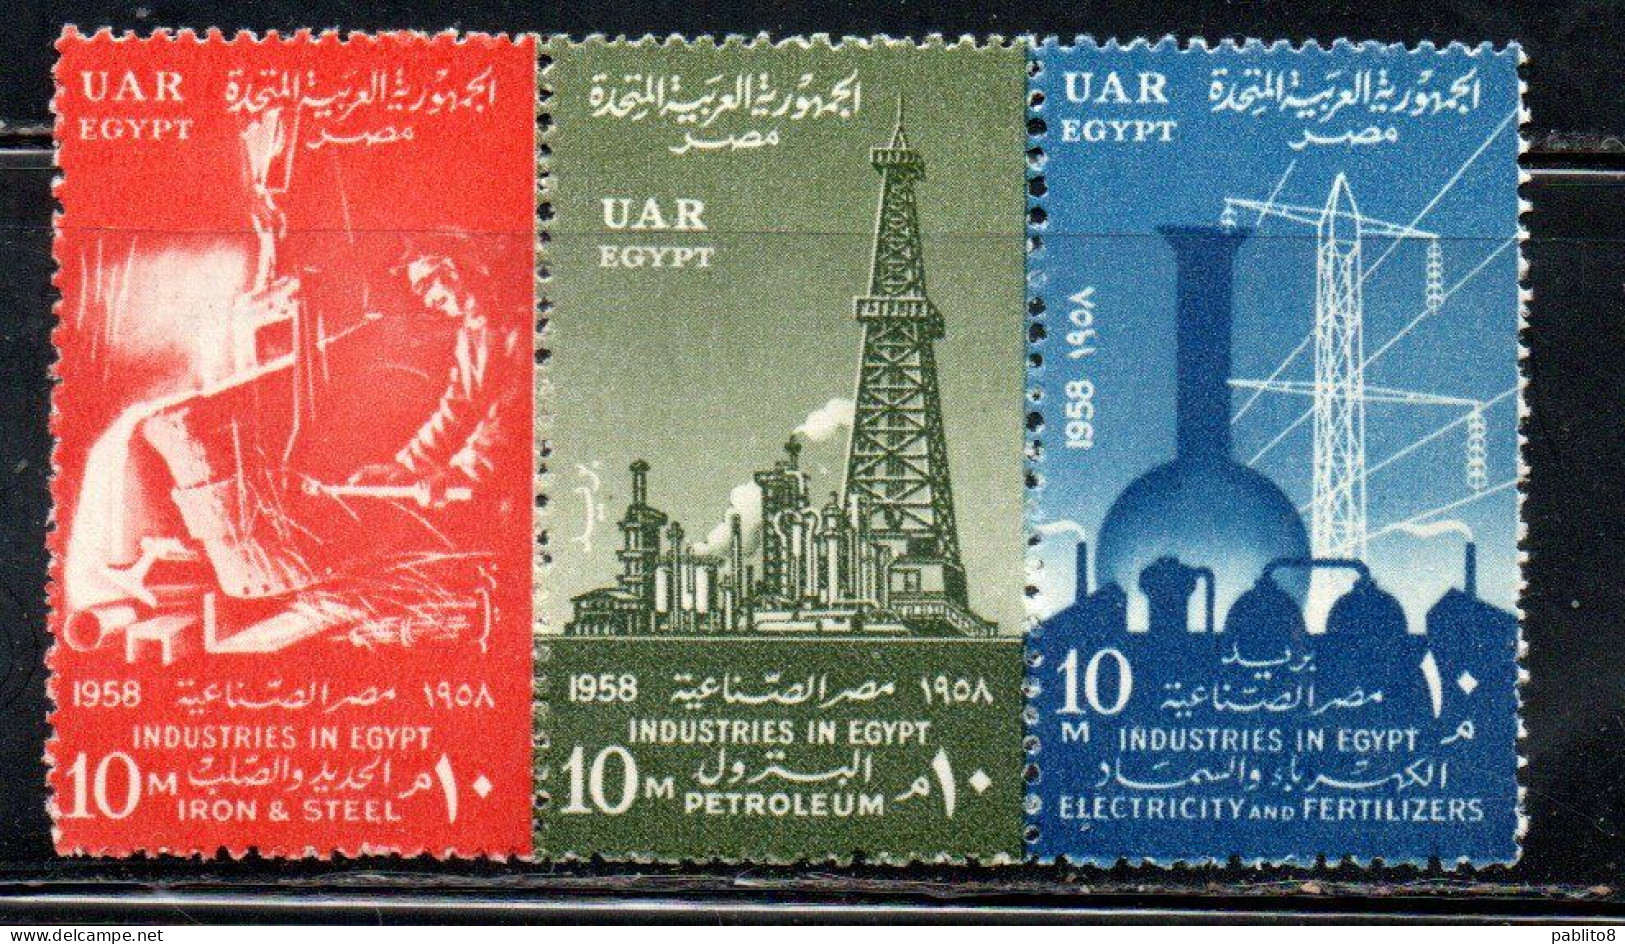 UAR EGYPT EGITTO 1958 INDUSTRIES IRON & STEEL + PETROLEUM OIL + ELECTRICITY AND FERTILIZERS INDUSTRY 10m  MNH - Nuovi